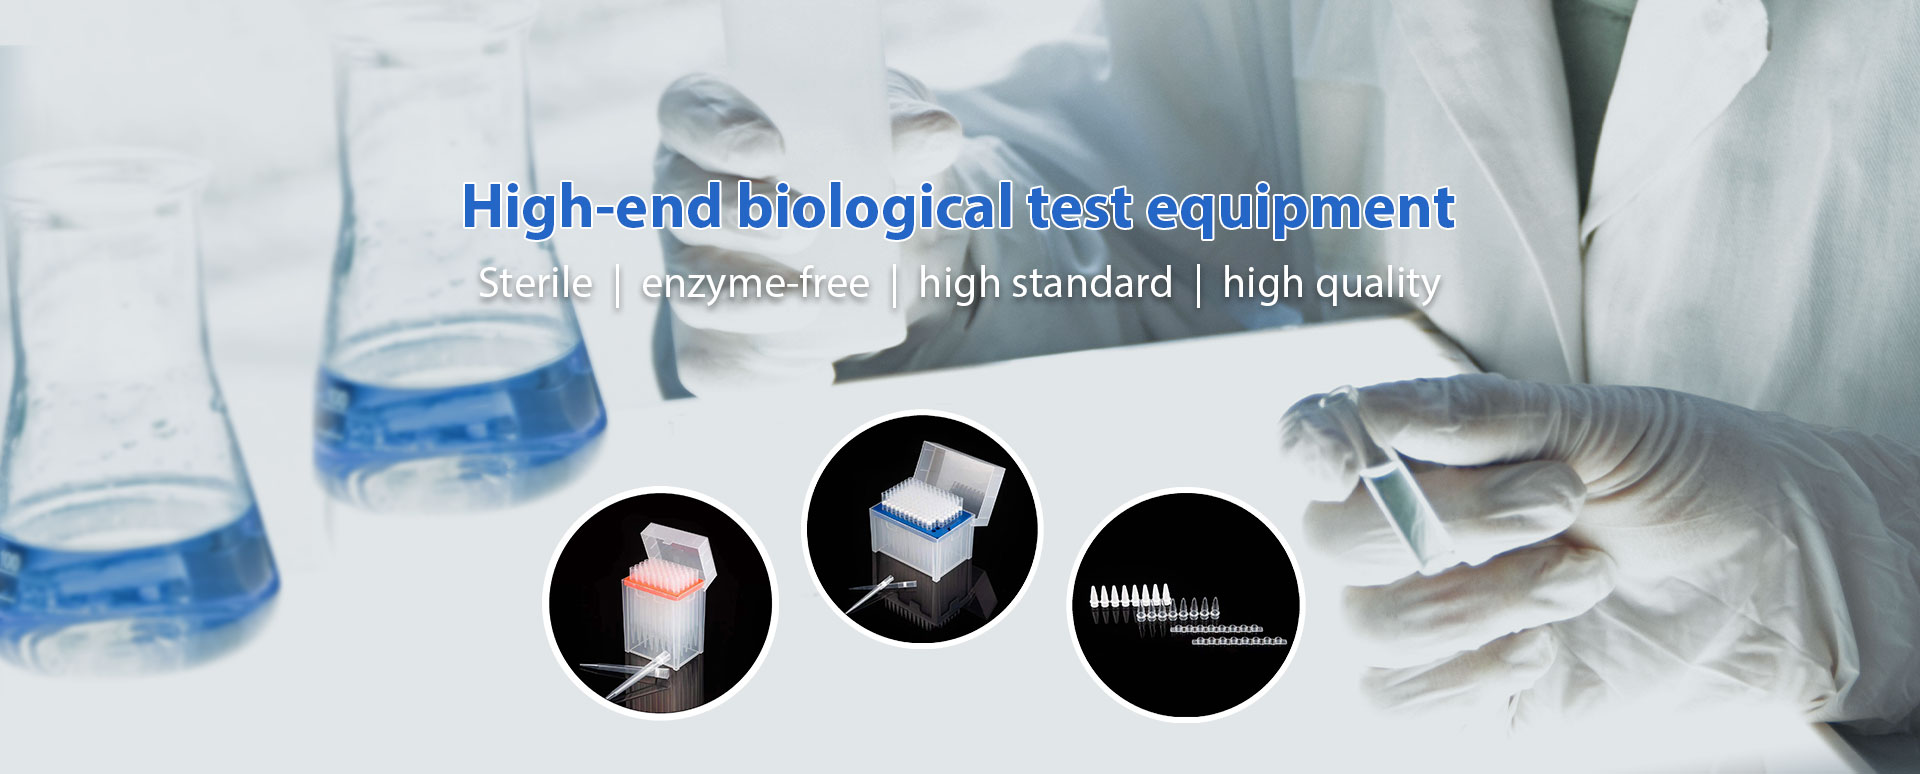 High-end biological test equipment